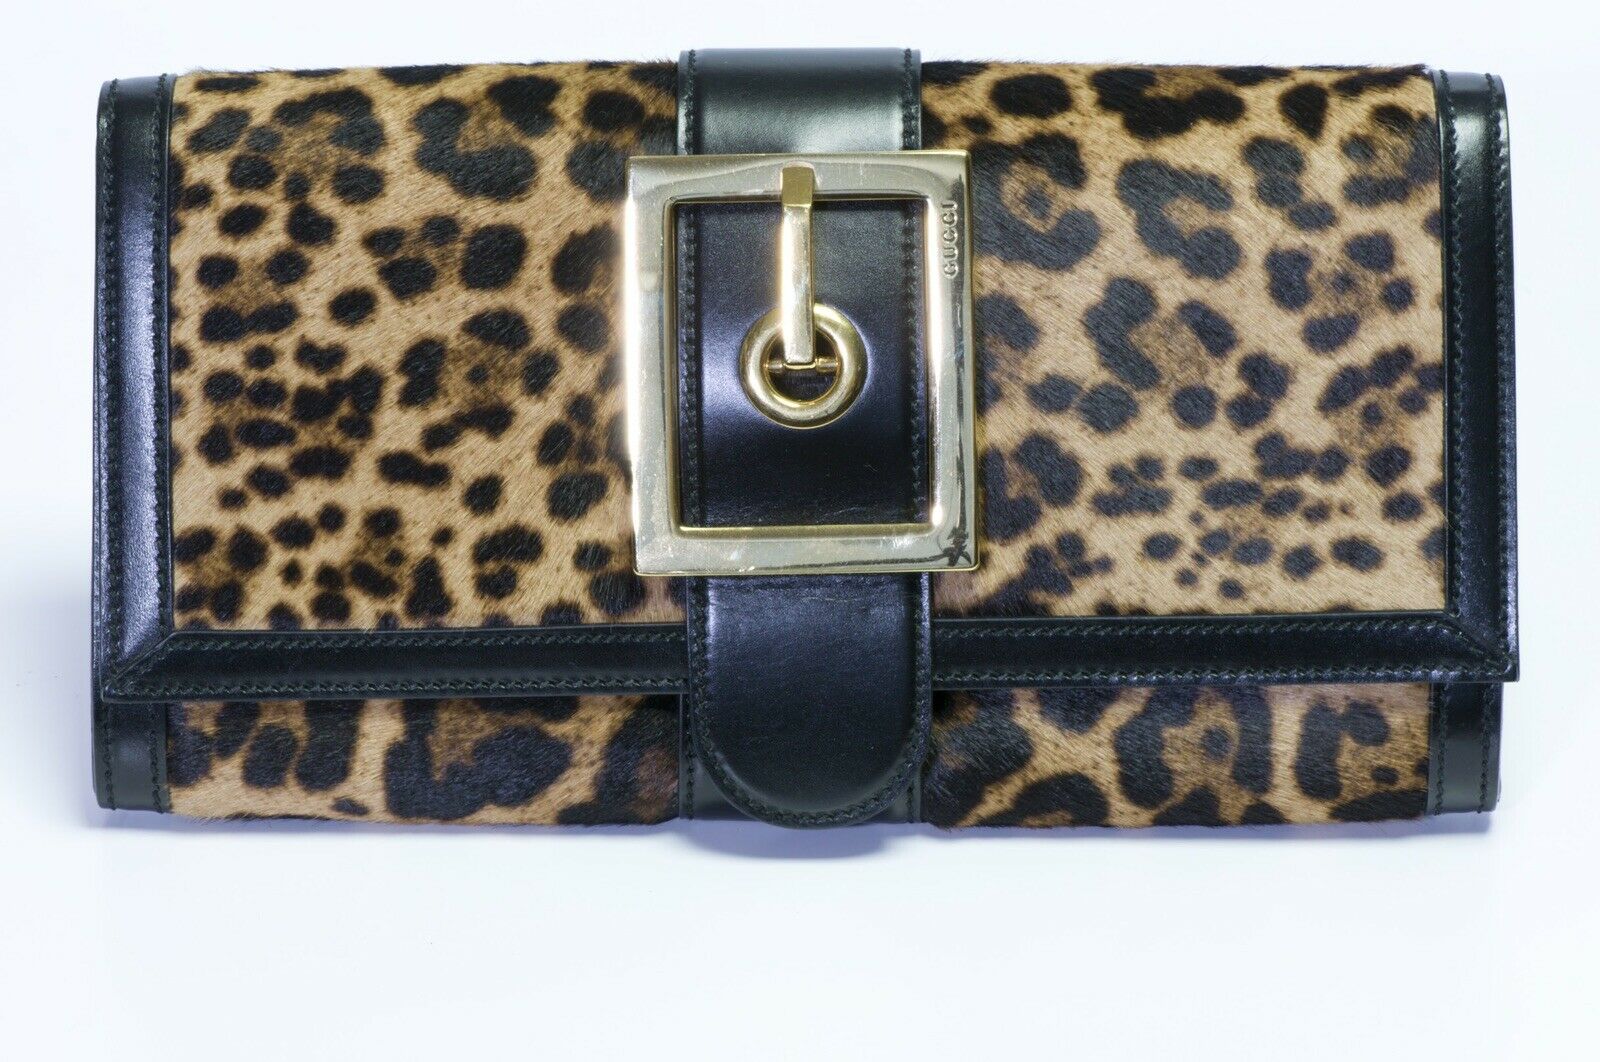 GUCCI “Lady” Brown Black Leopard Calf Hair Leather Buckle Clutch Bag